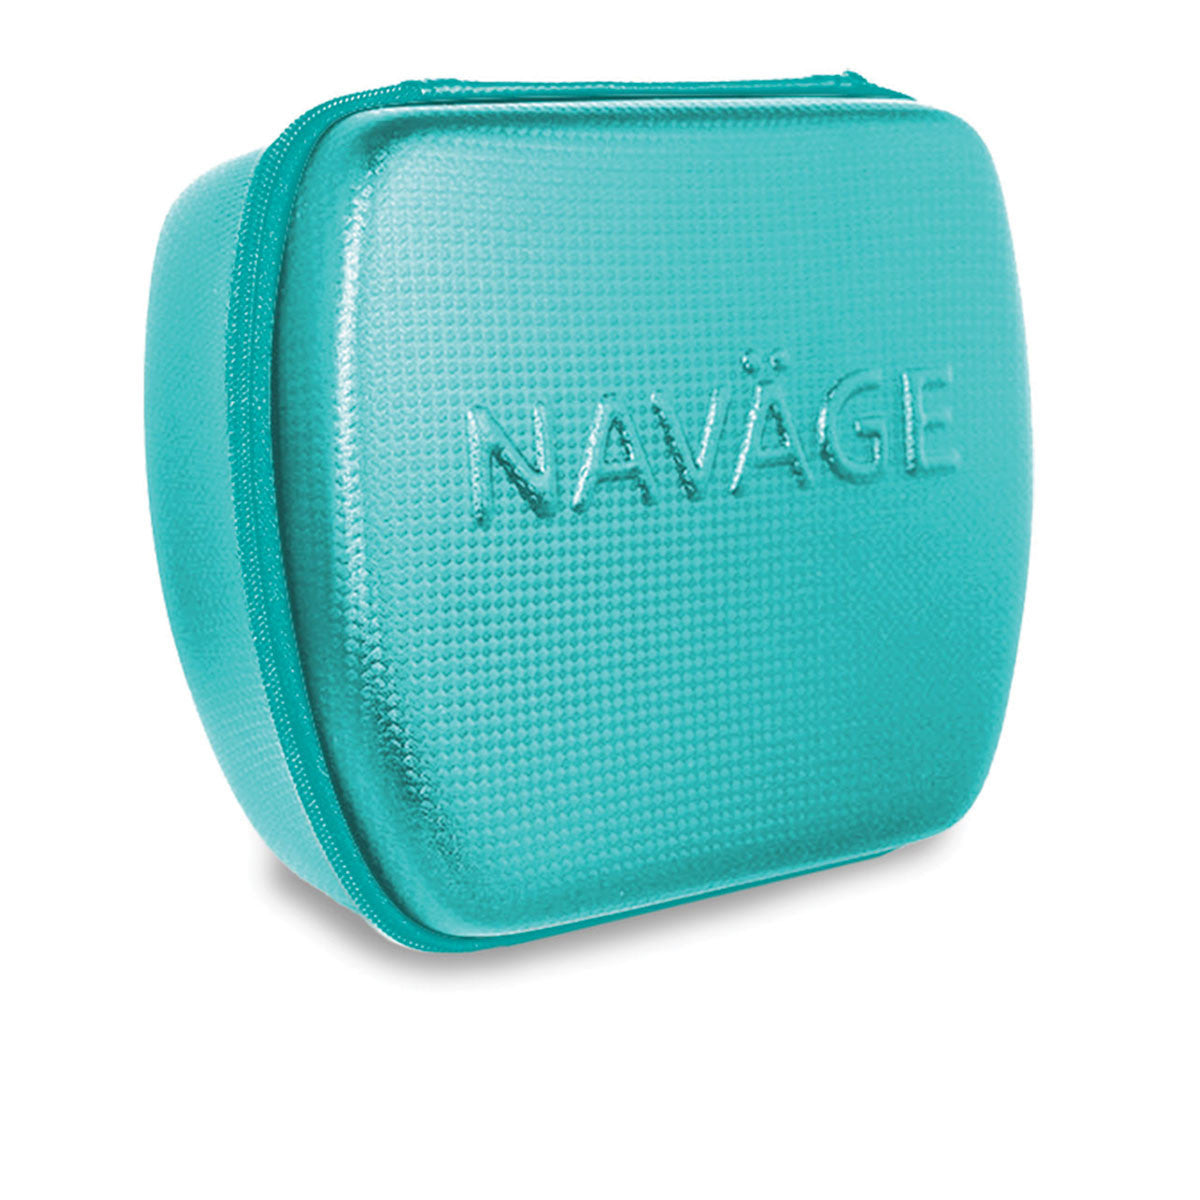 Navage Nasal Care Starter Bundle: Navage Nose Cleaner, 20 SaltPods, Plus  Bonus 10 SaltPods - Medpick